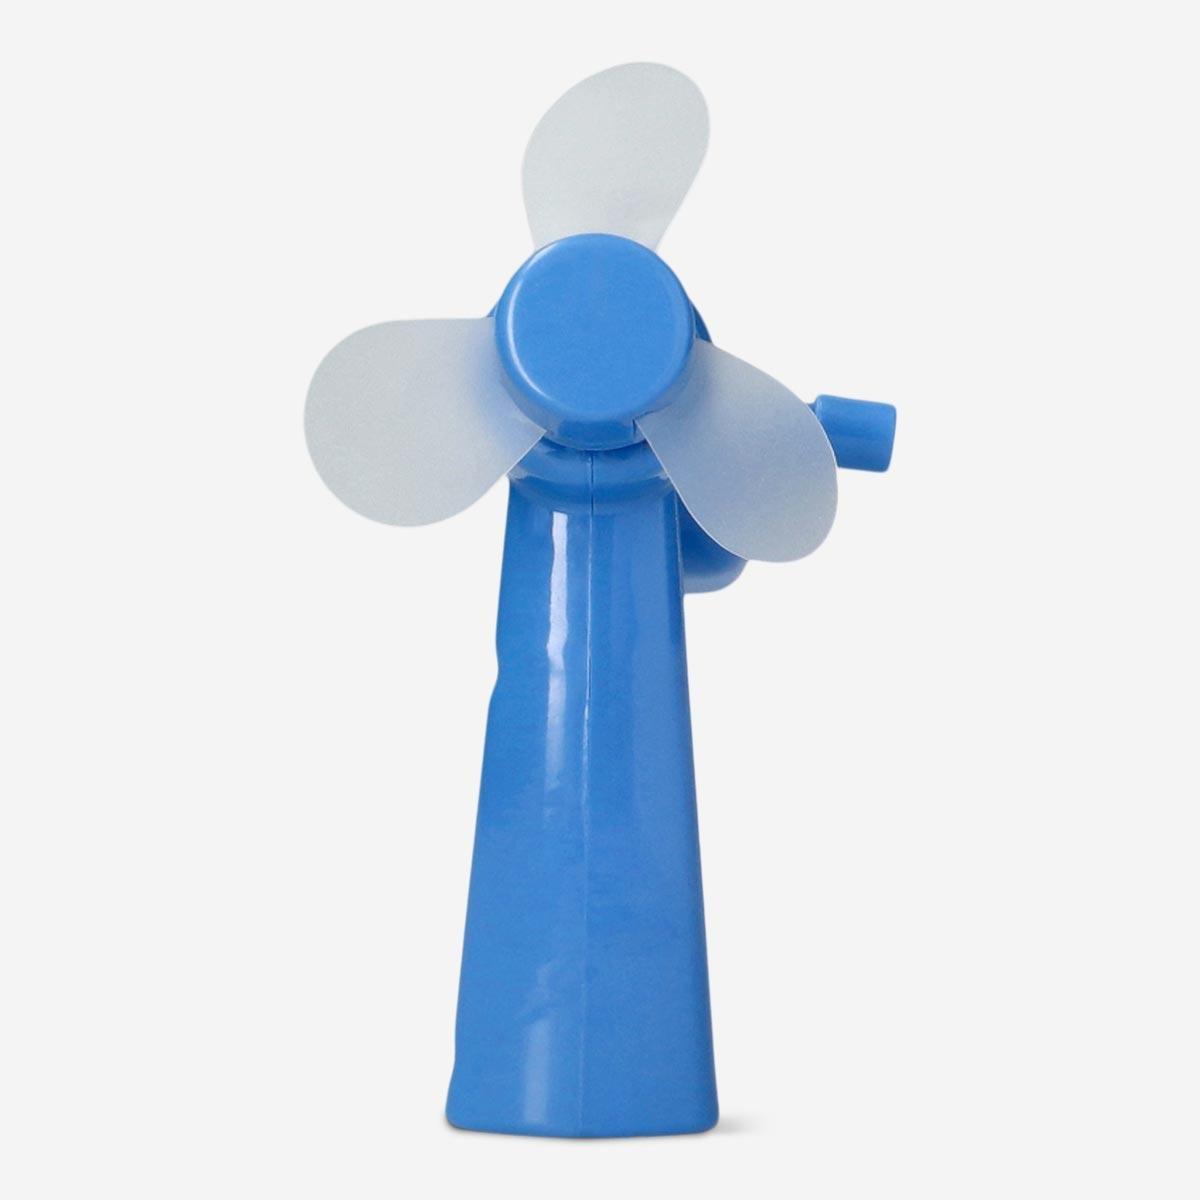 Blue fan with crank handle